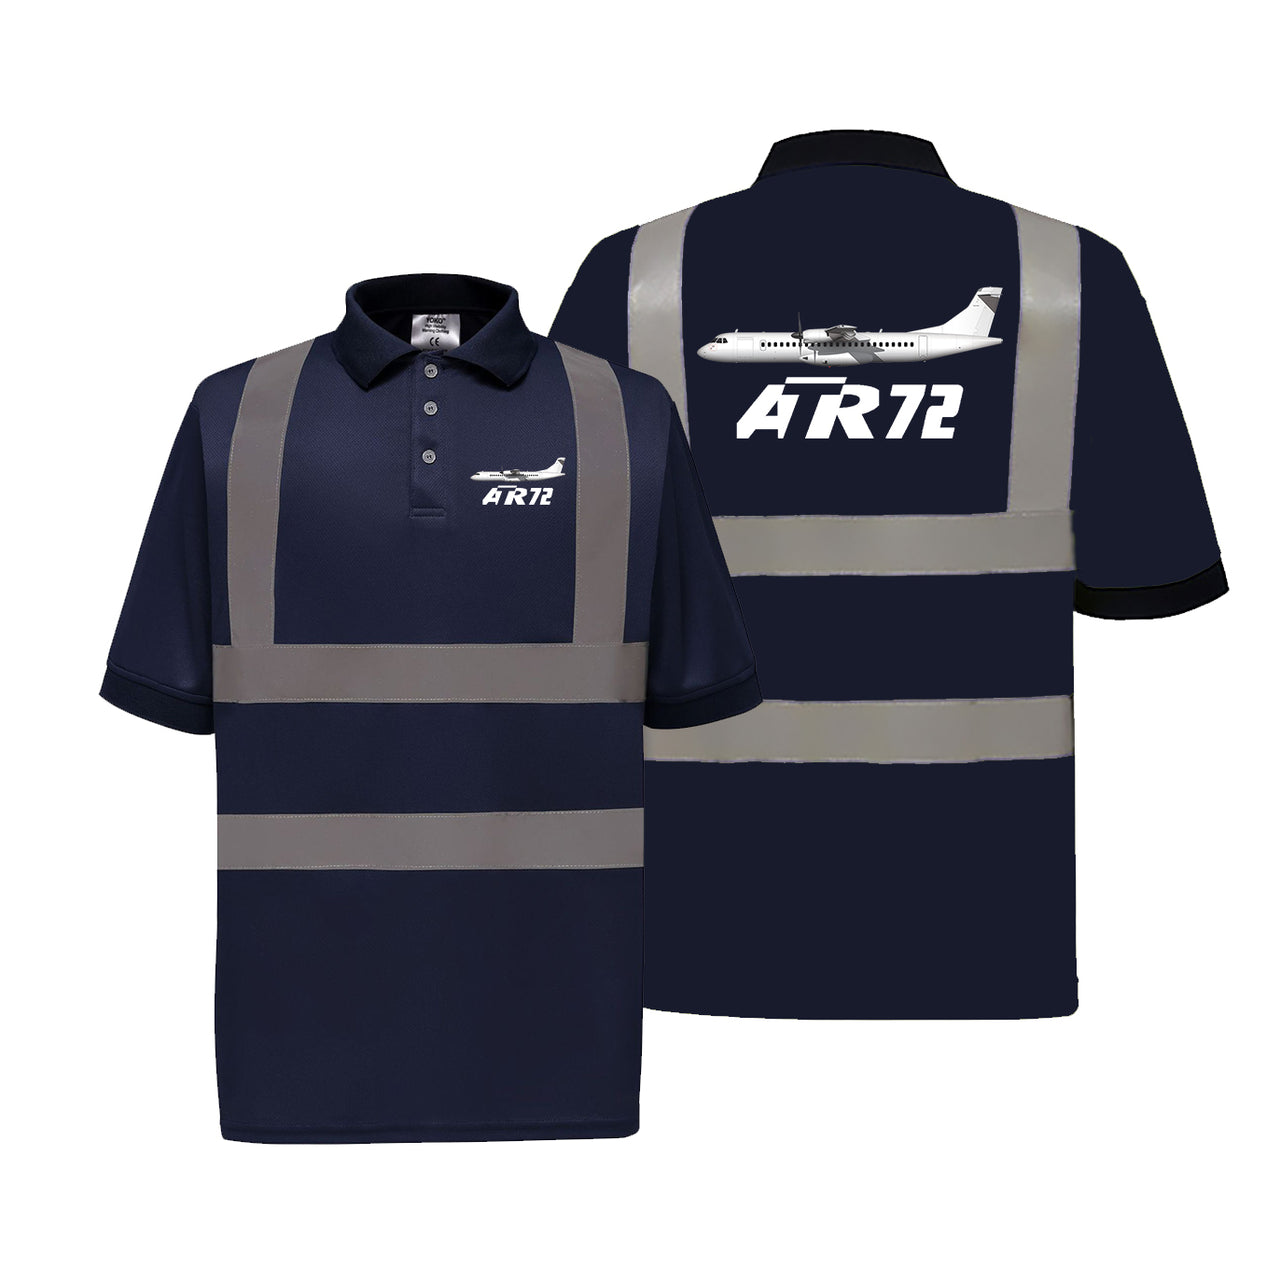 The ATR72 Designed Reflective Polo T-Shirts